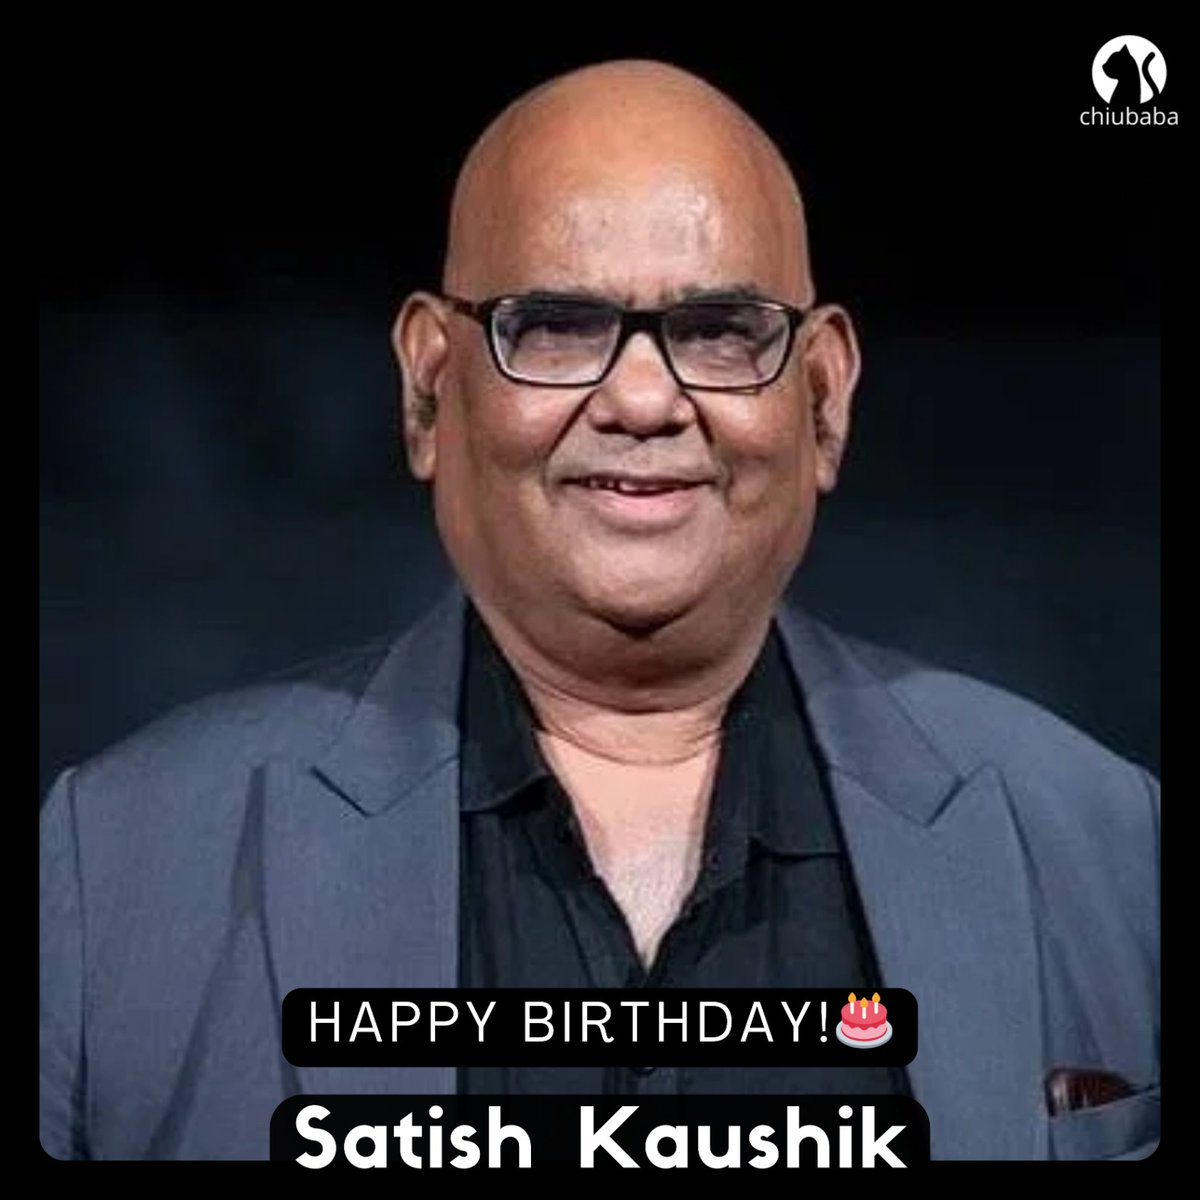 Happy Birthday, @satishkaushik2178! 🎉🎂 Your talent lights up screens worldwide, bringing joy to millions. #SatishKaushik #BollywoodLegend #BirthdayWishes #StarBirthday #Entertainment #CelebrityNews #chiubaba